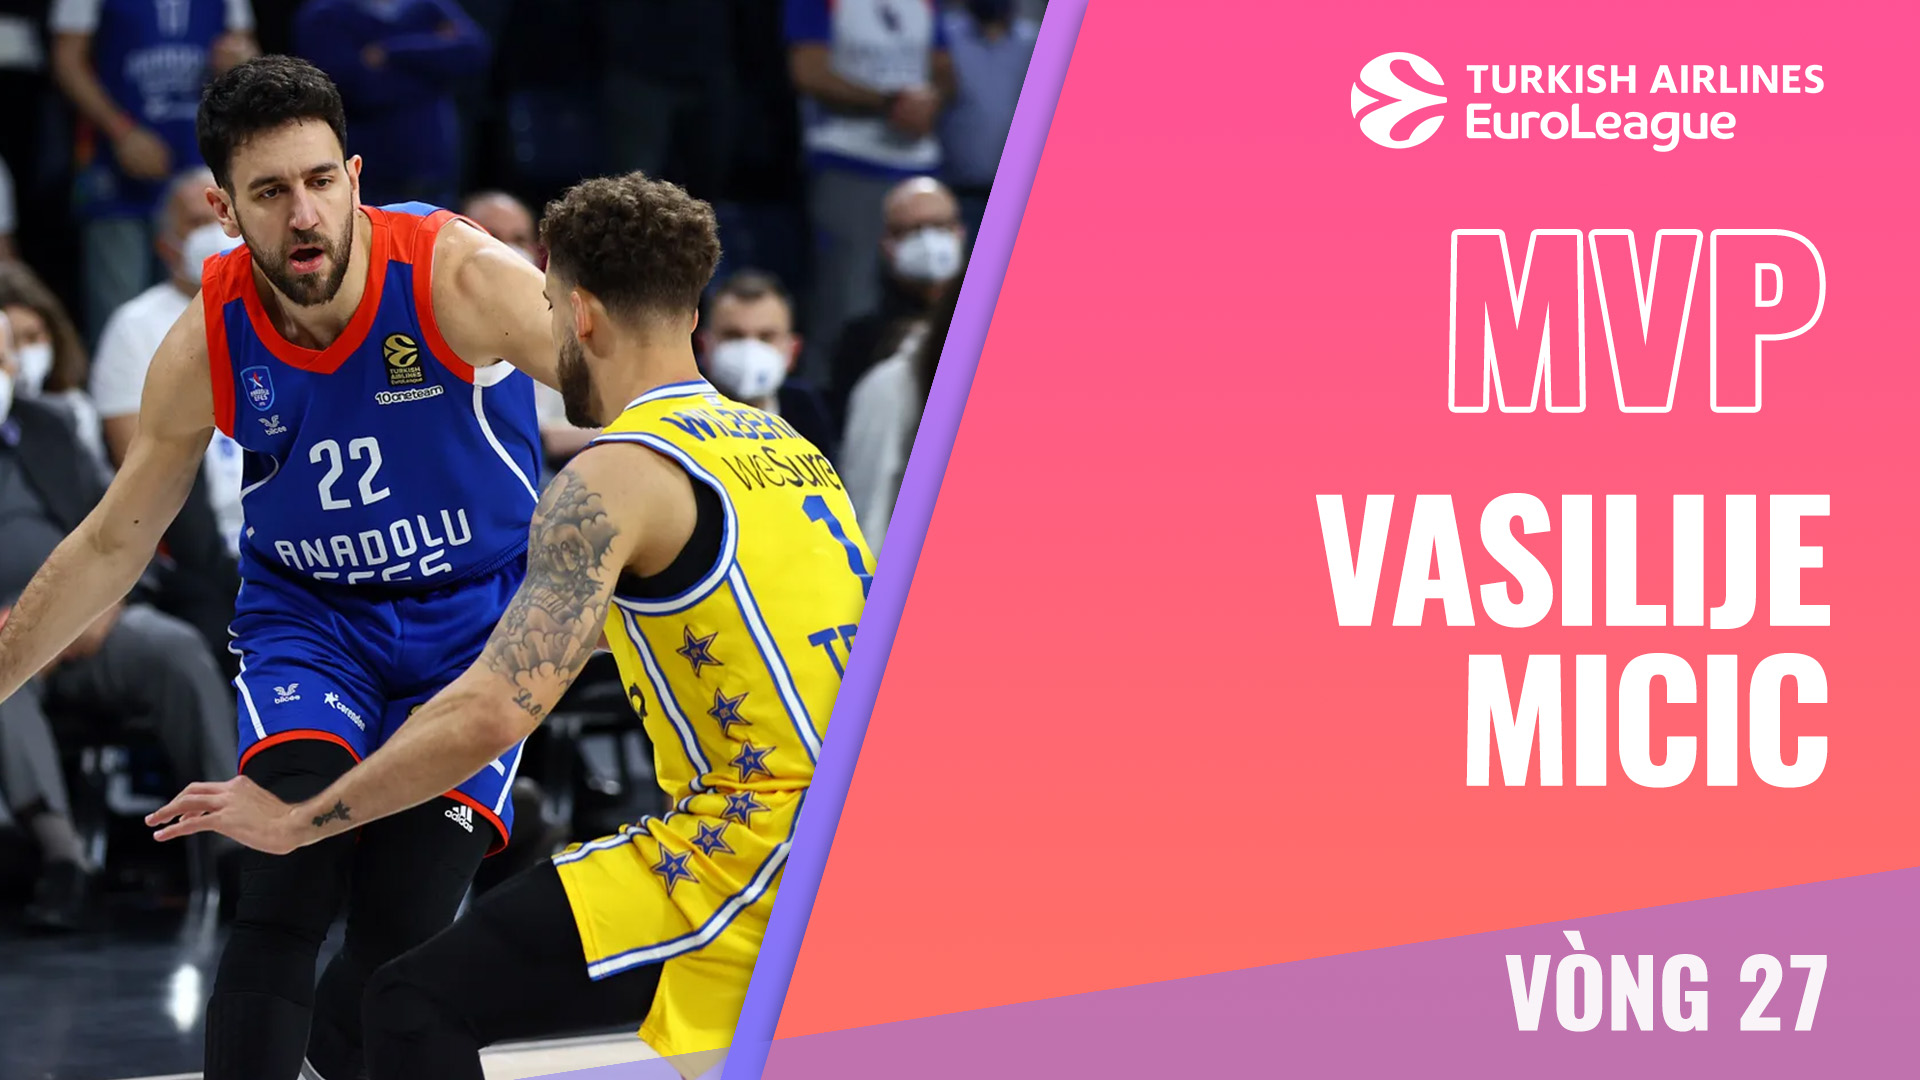 Vasilije Micic - MVP vòng 27 EuroLeague - Turkish Airlines EuroLeague